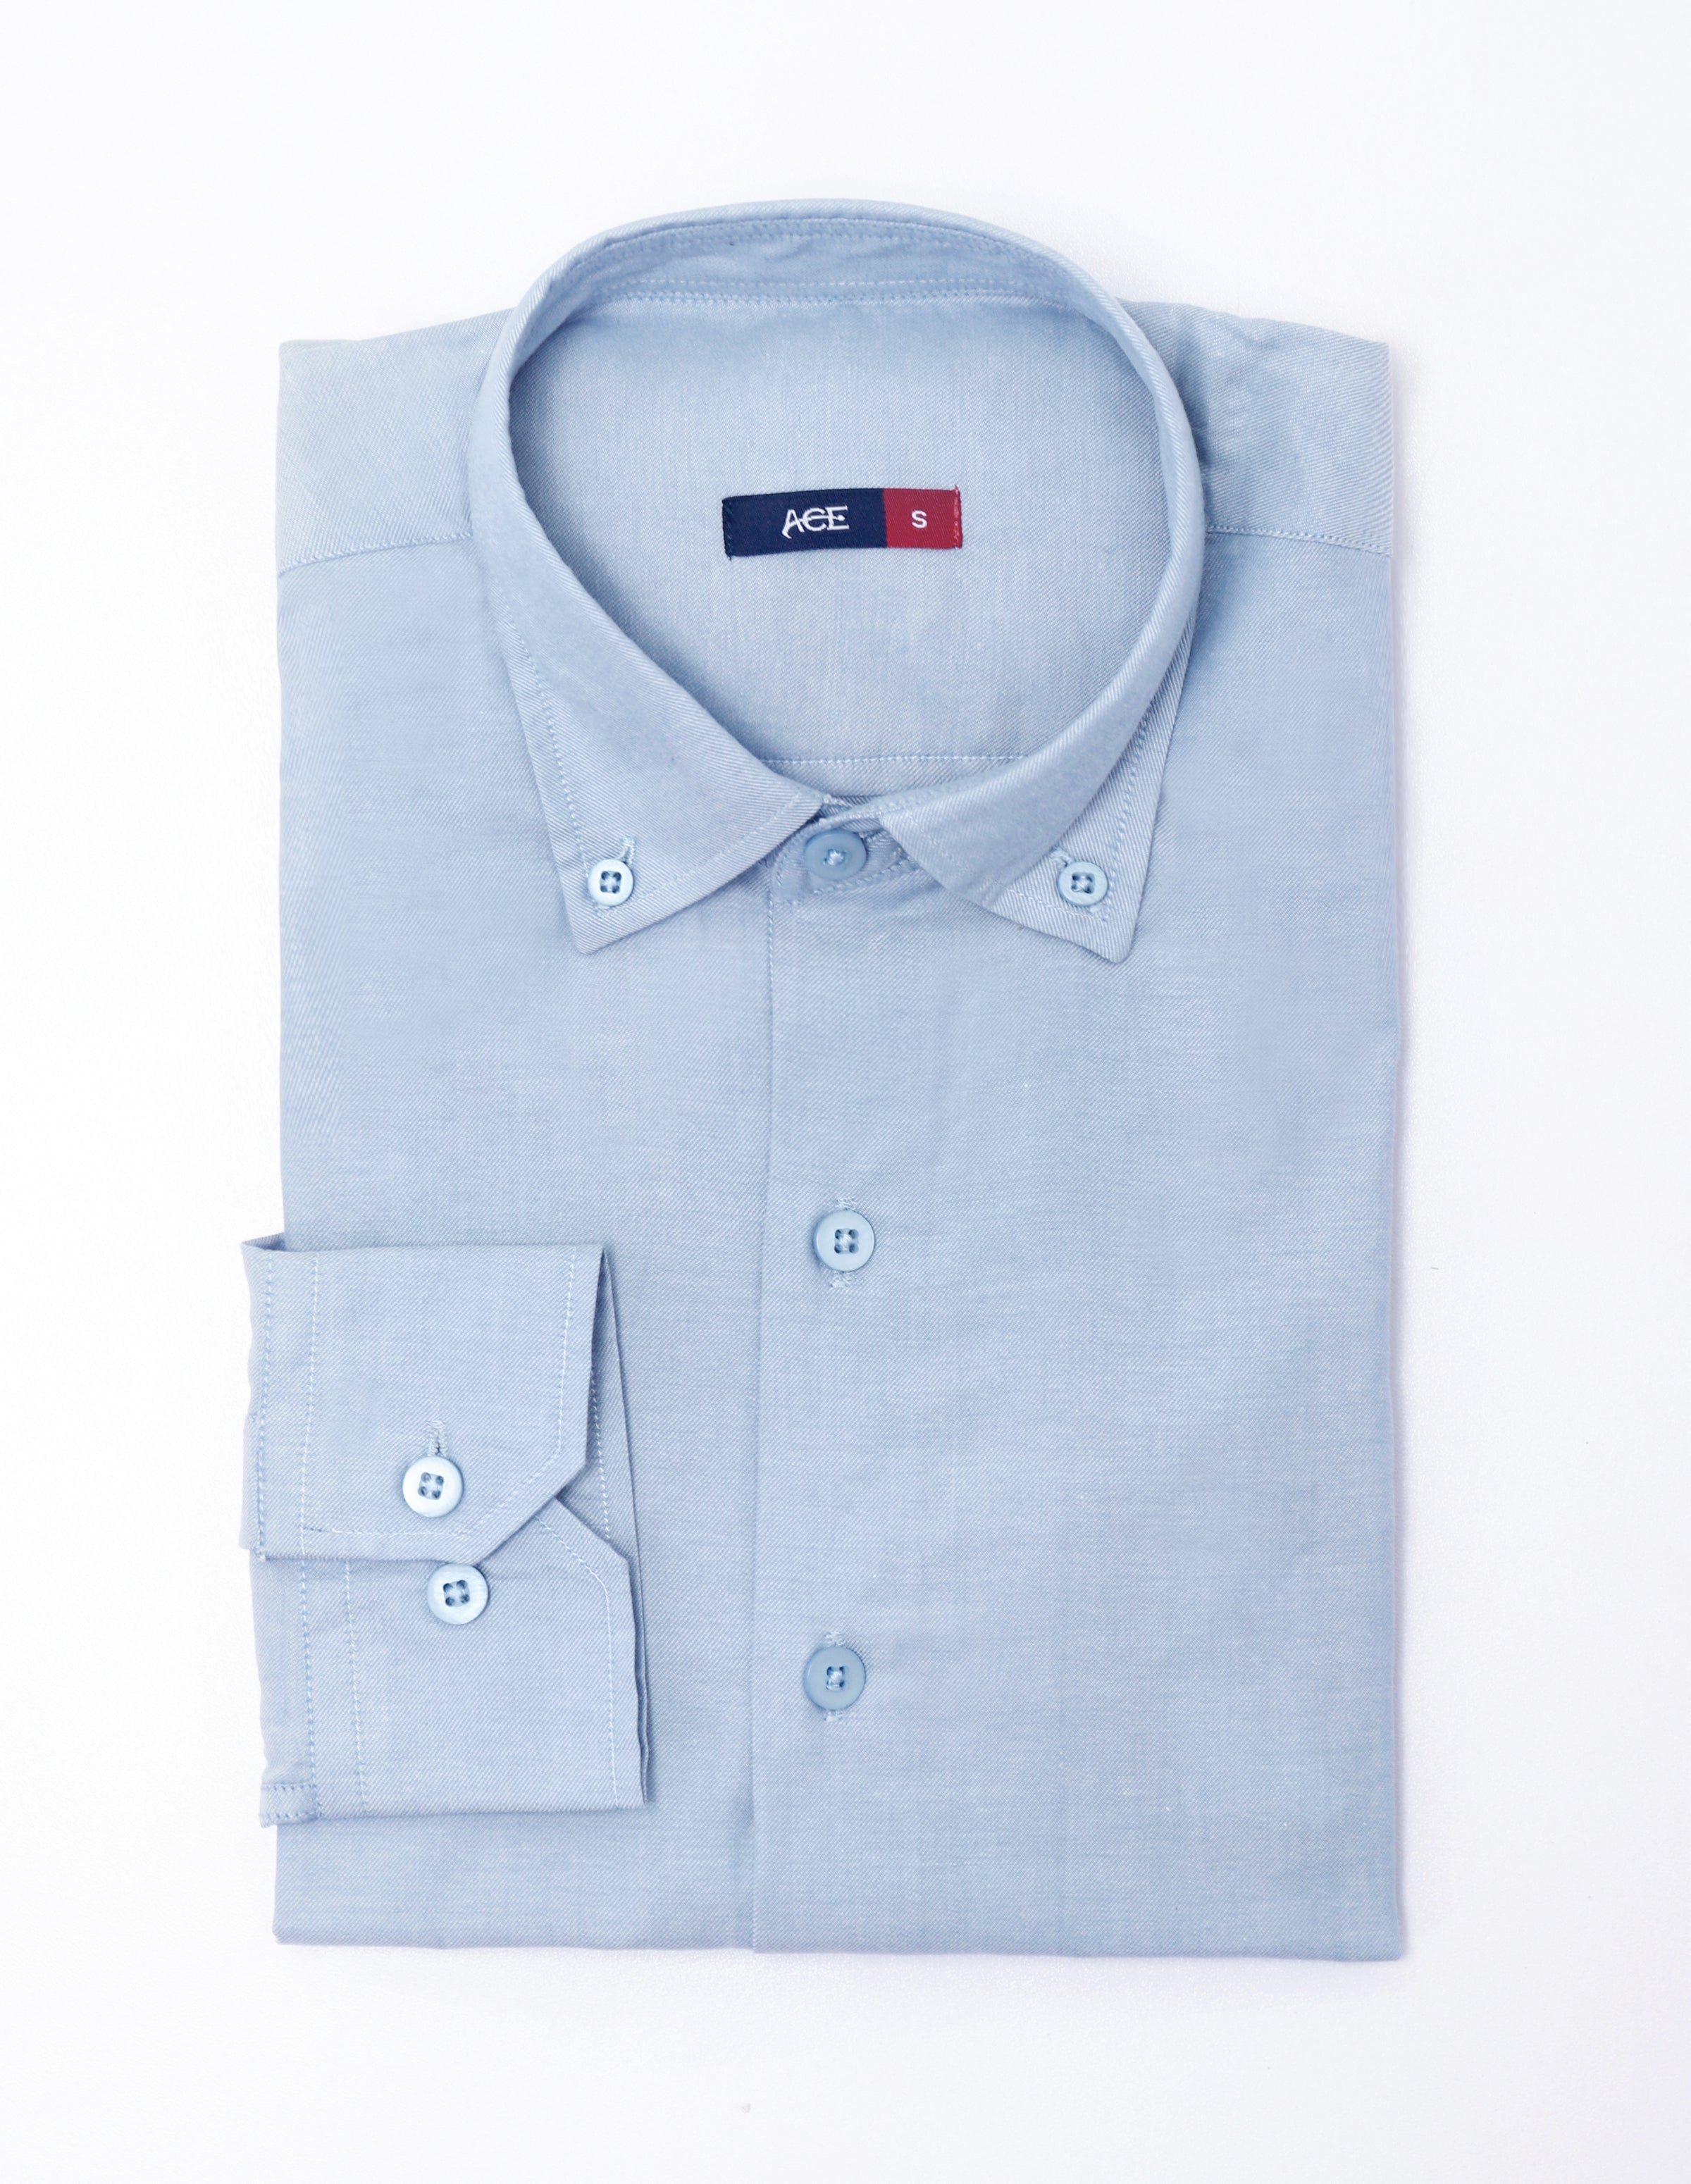 Men's Blue Full Sleeve Casual Shirt - ACE 70070 (S20)